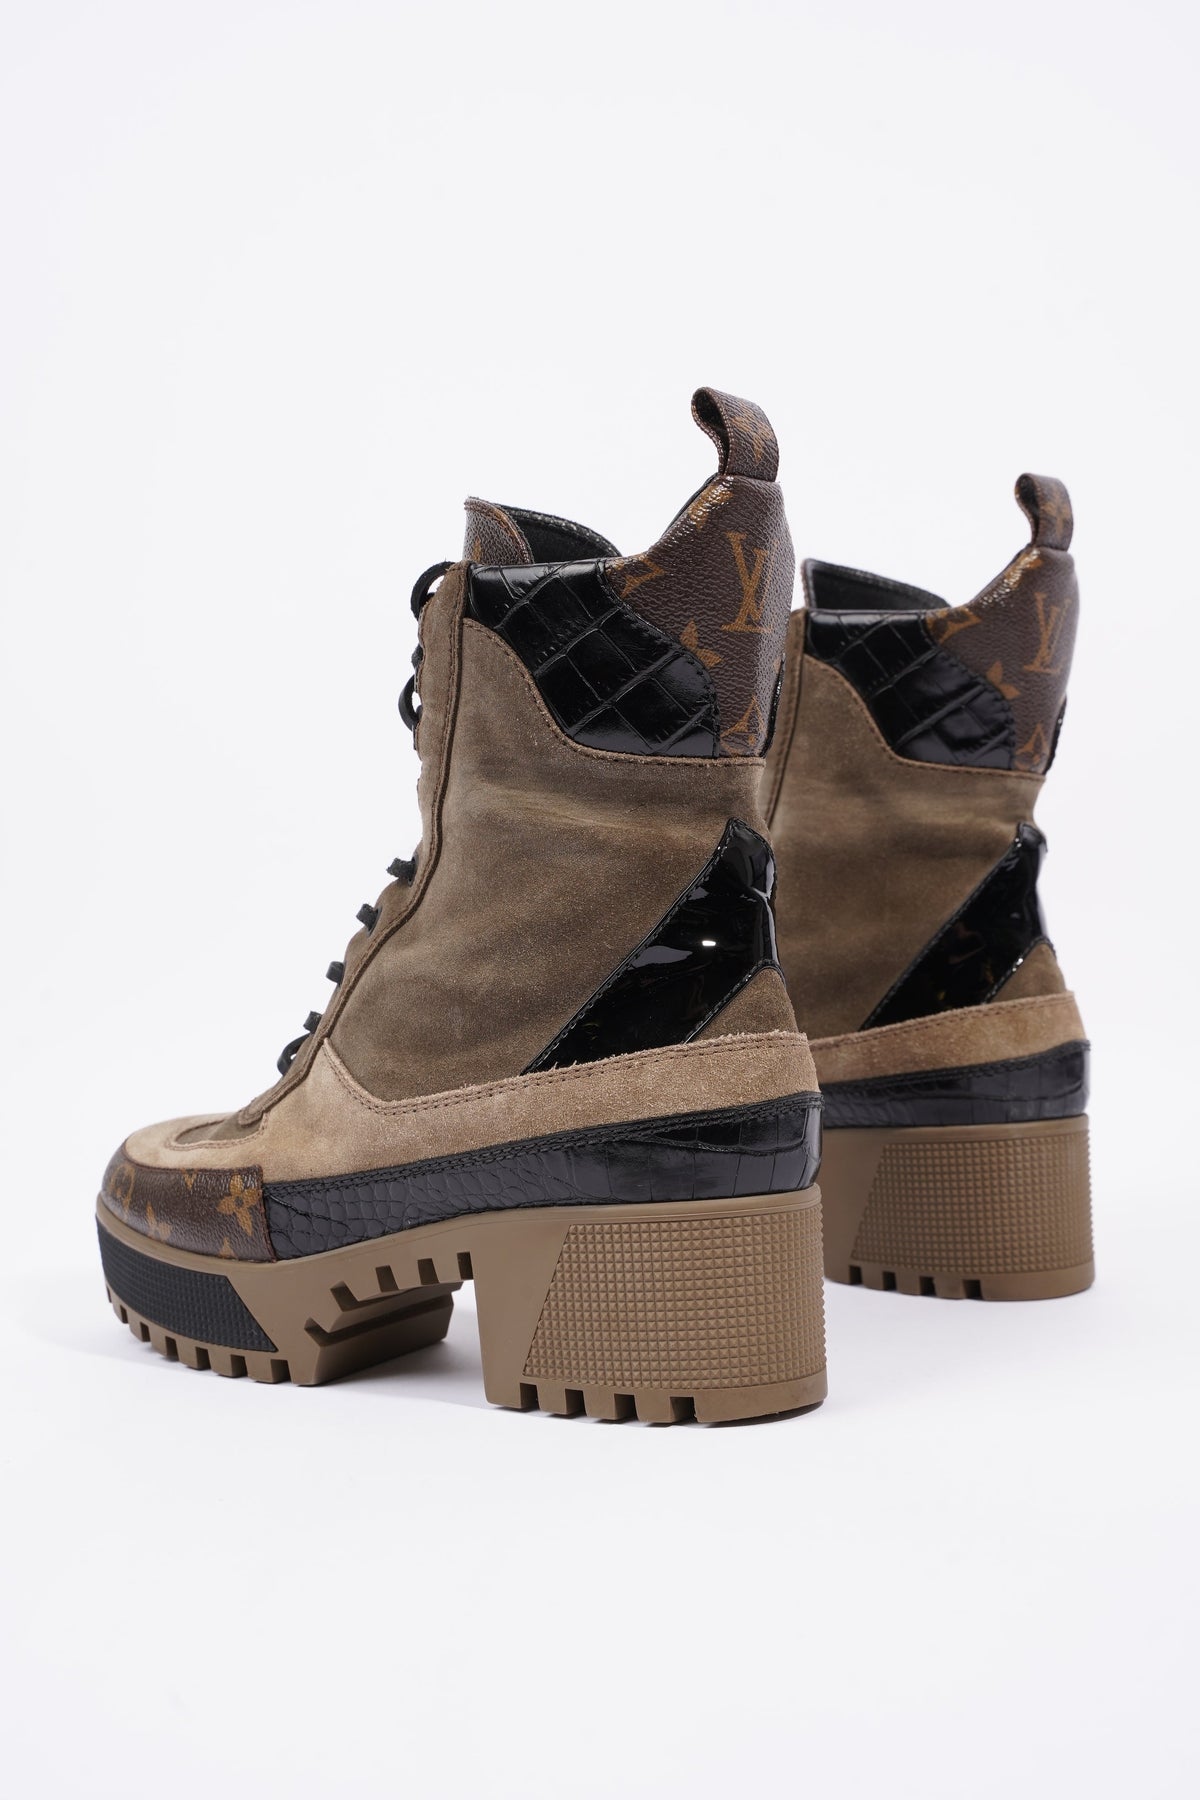 louis vuitton Desert boots 37 worn once, no marks, box/bags incl.